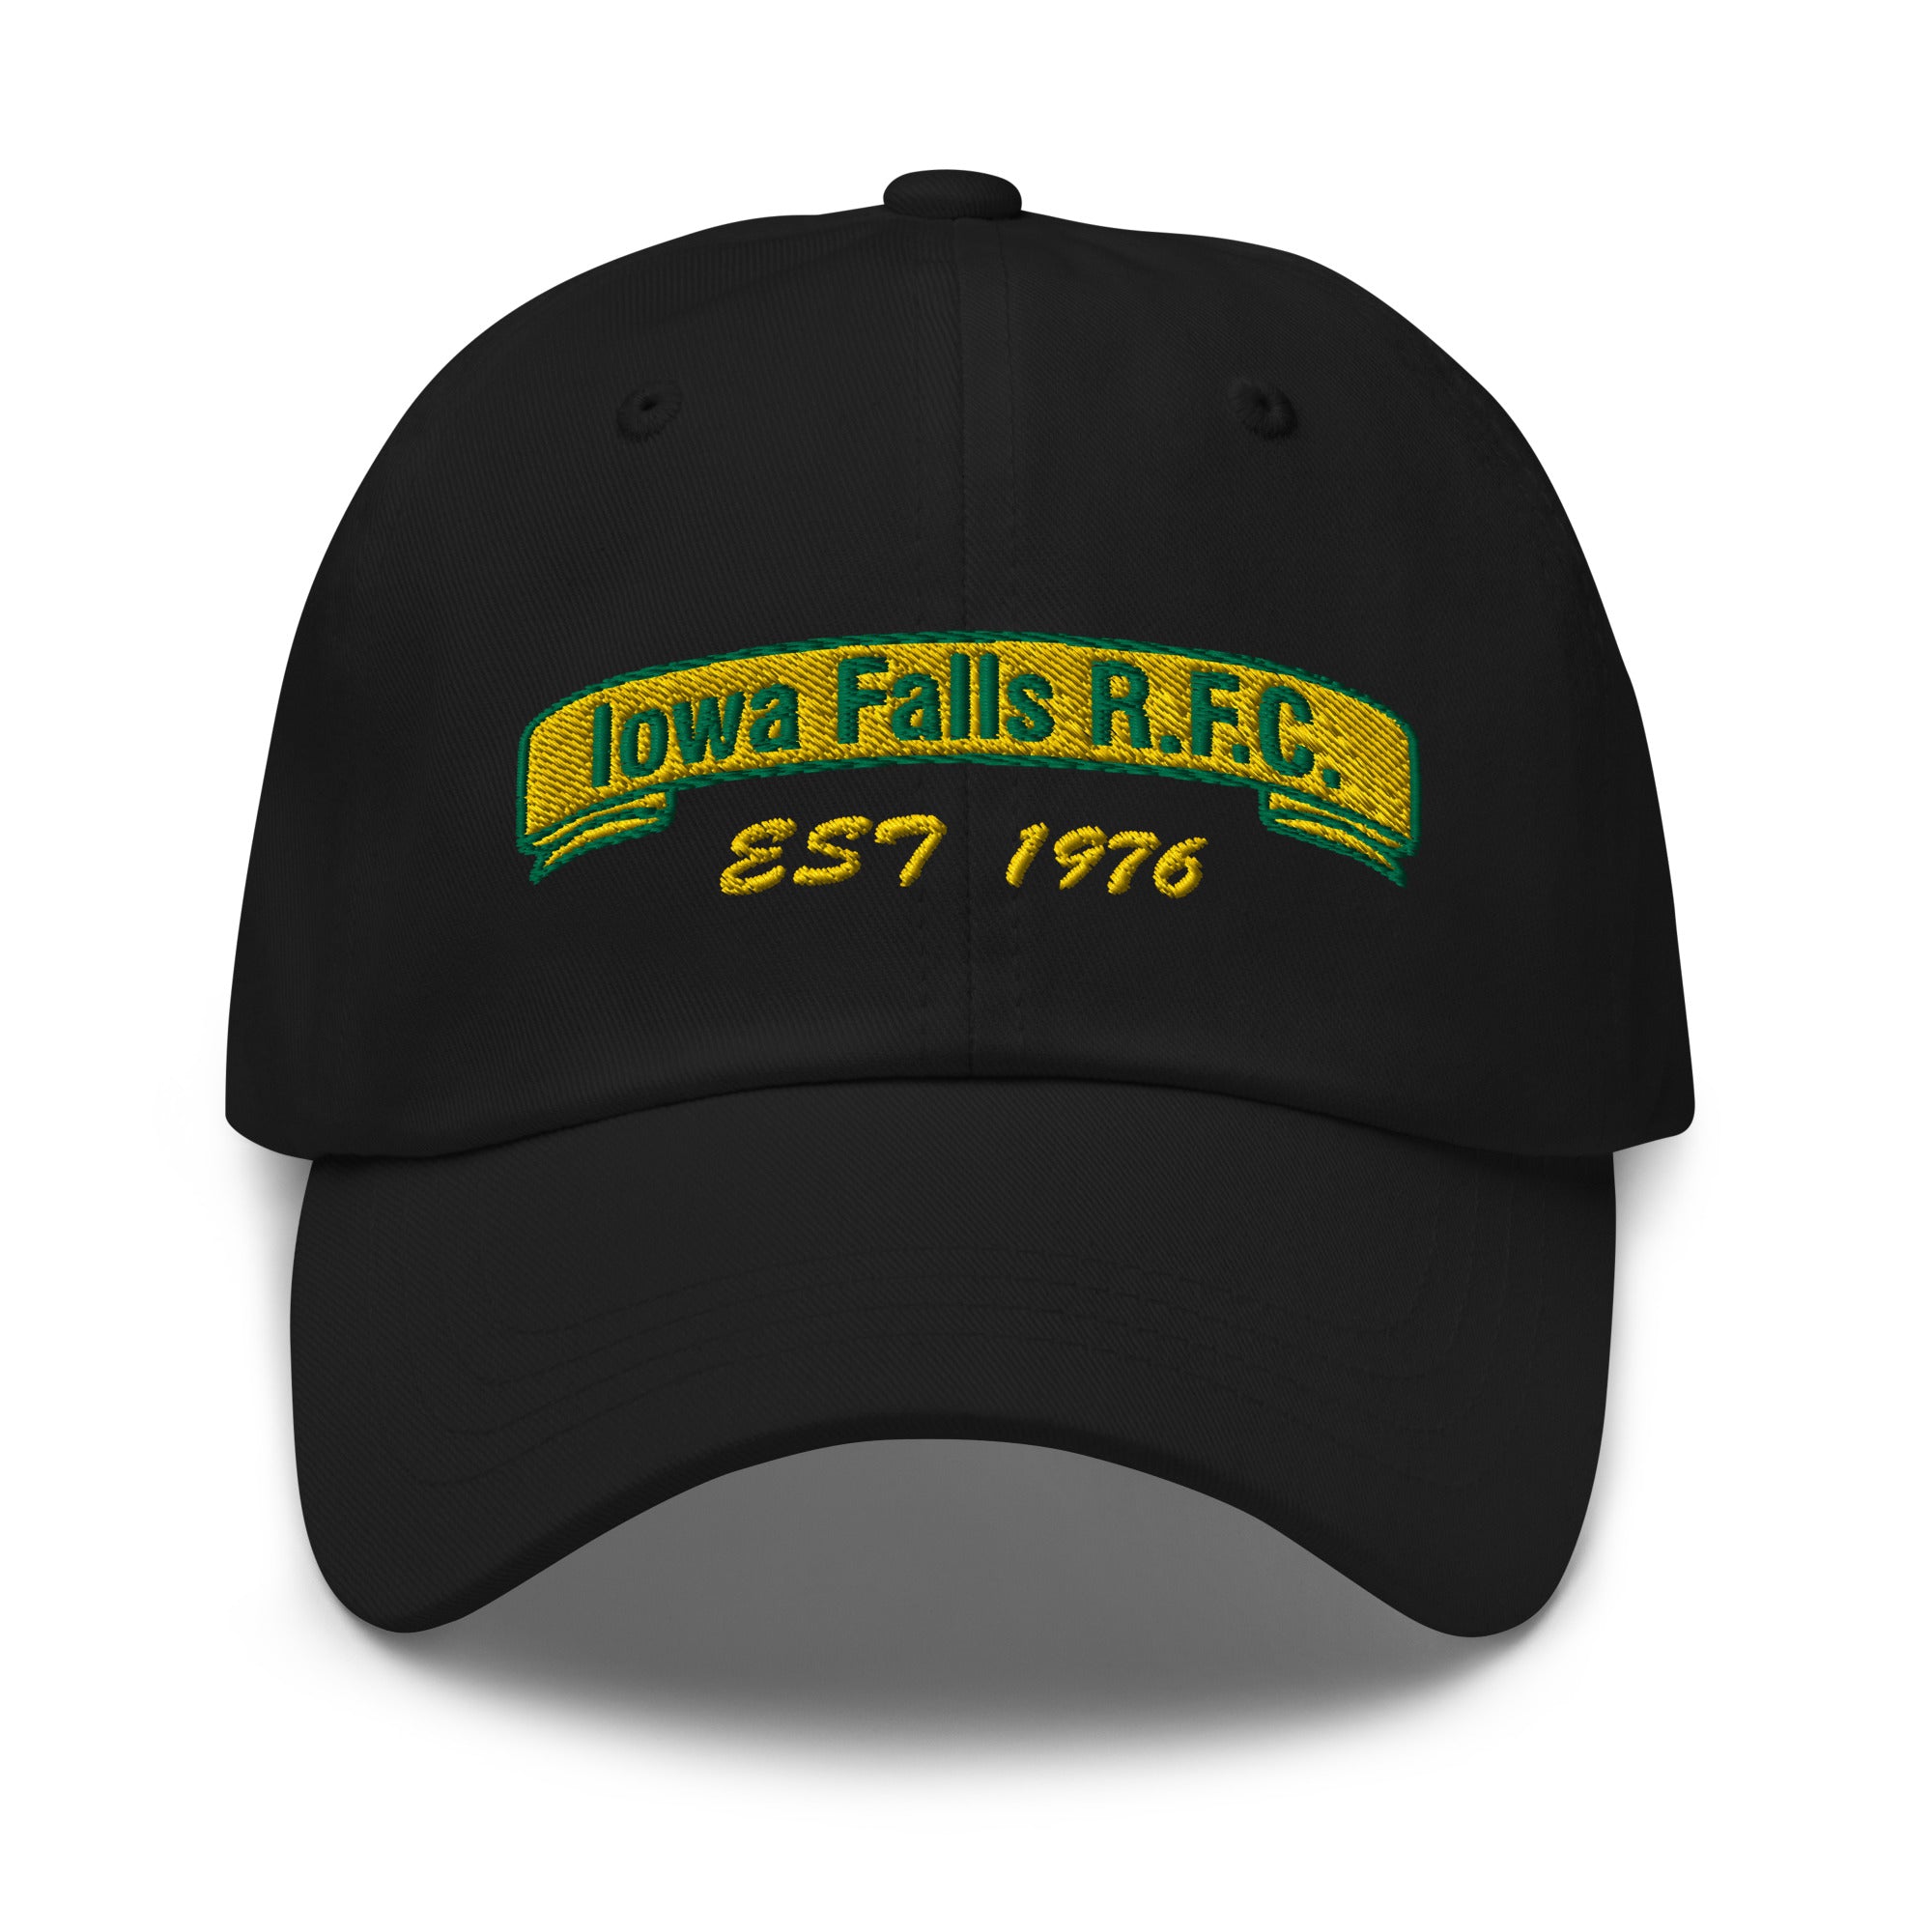 Rugby Imports Iowa Falls RFC Adjustable Hat